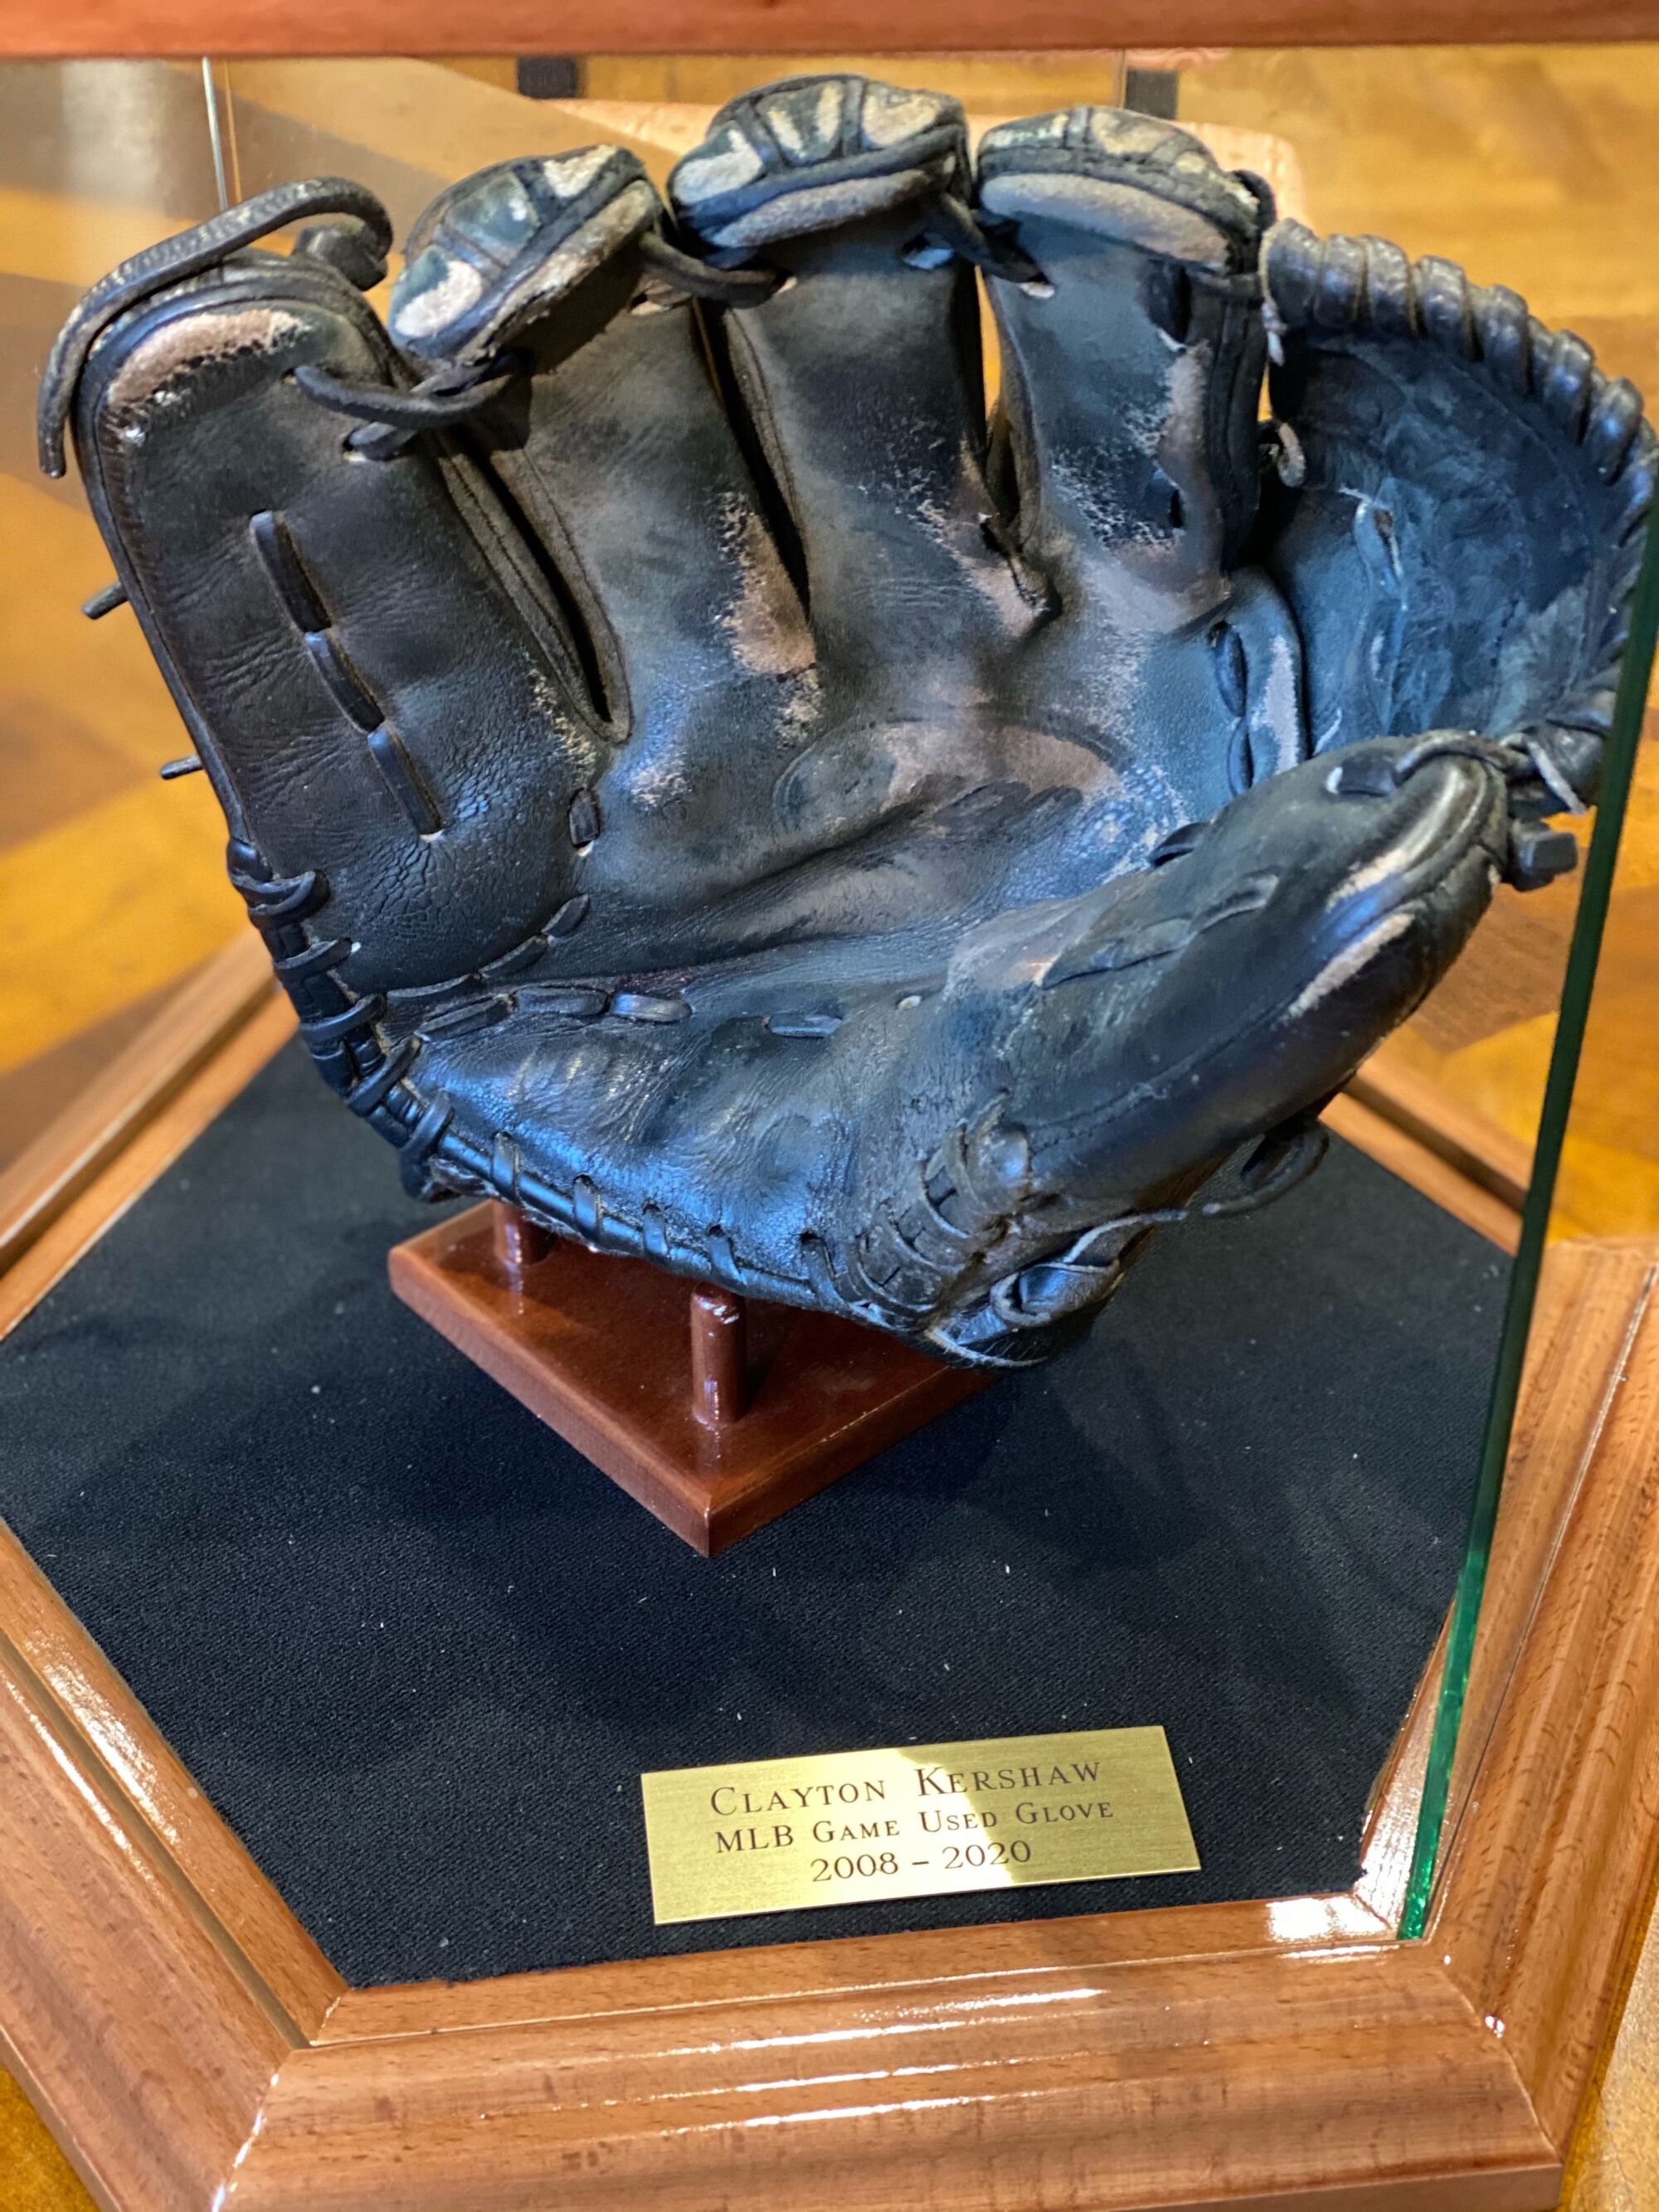 Dodger pitcher Clayton Kershaw's MLB Game Used Glove 2008-2020 trophy. 